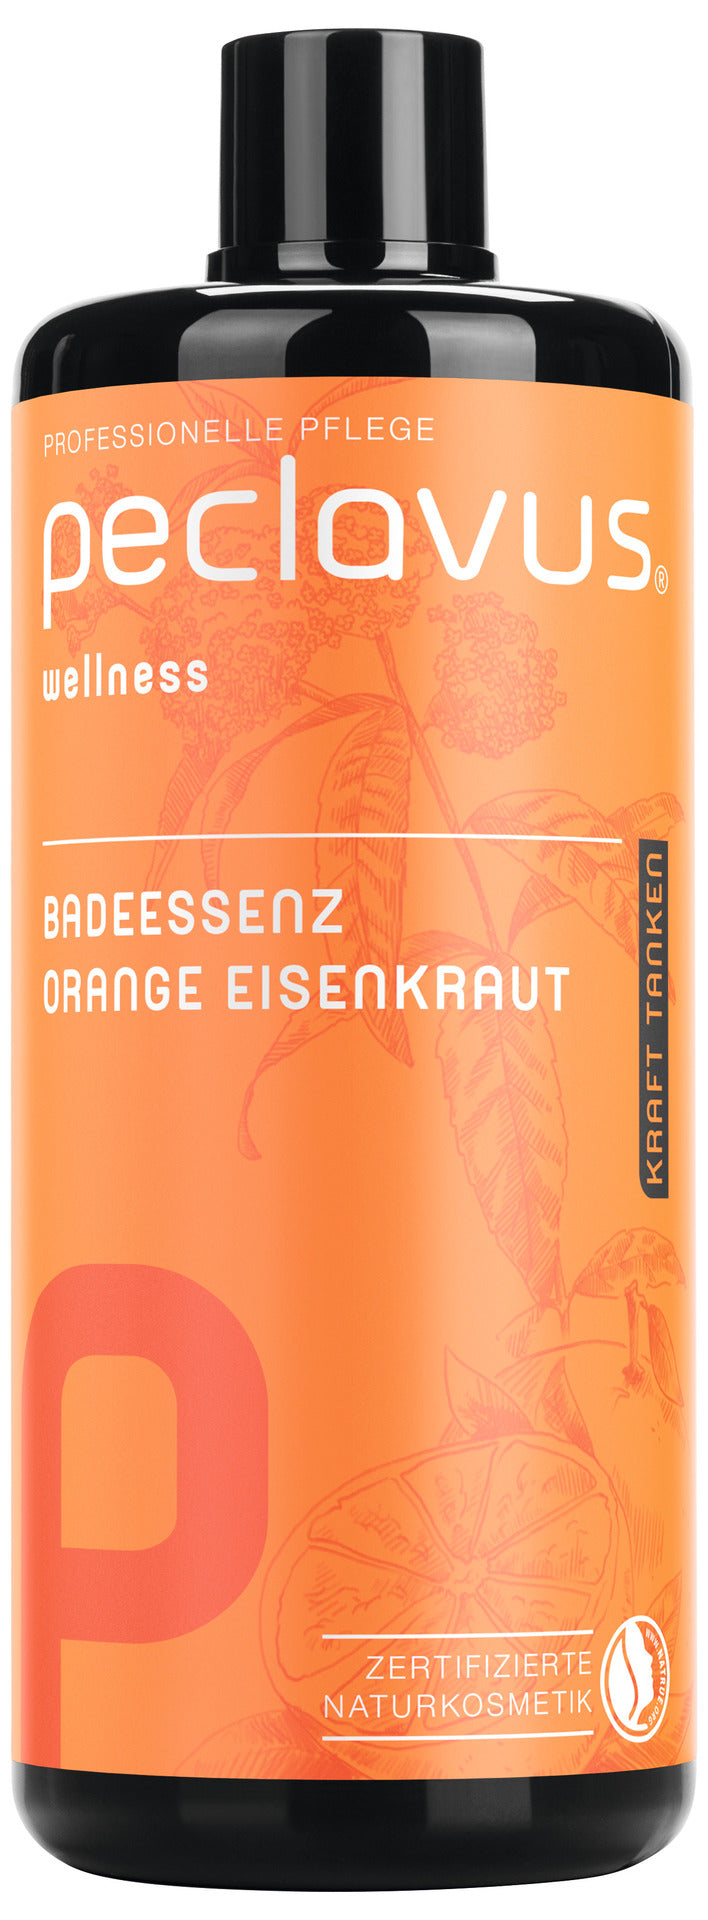 Essence de bain - Orange Verveine - "Recharger ses batteries" - 500 ml - Peclavus